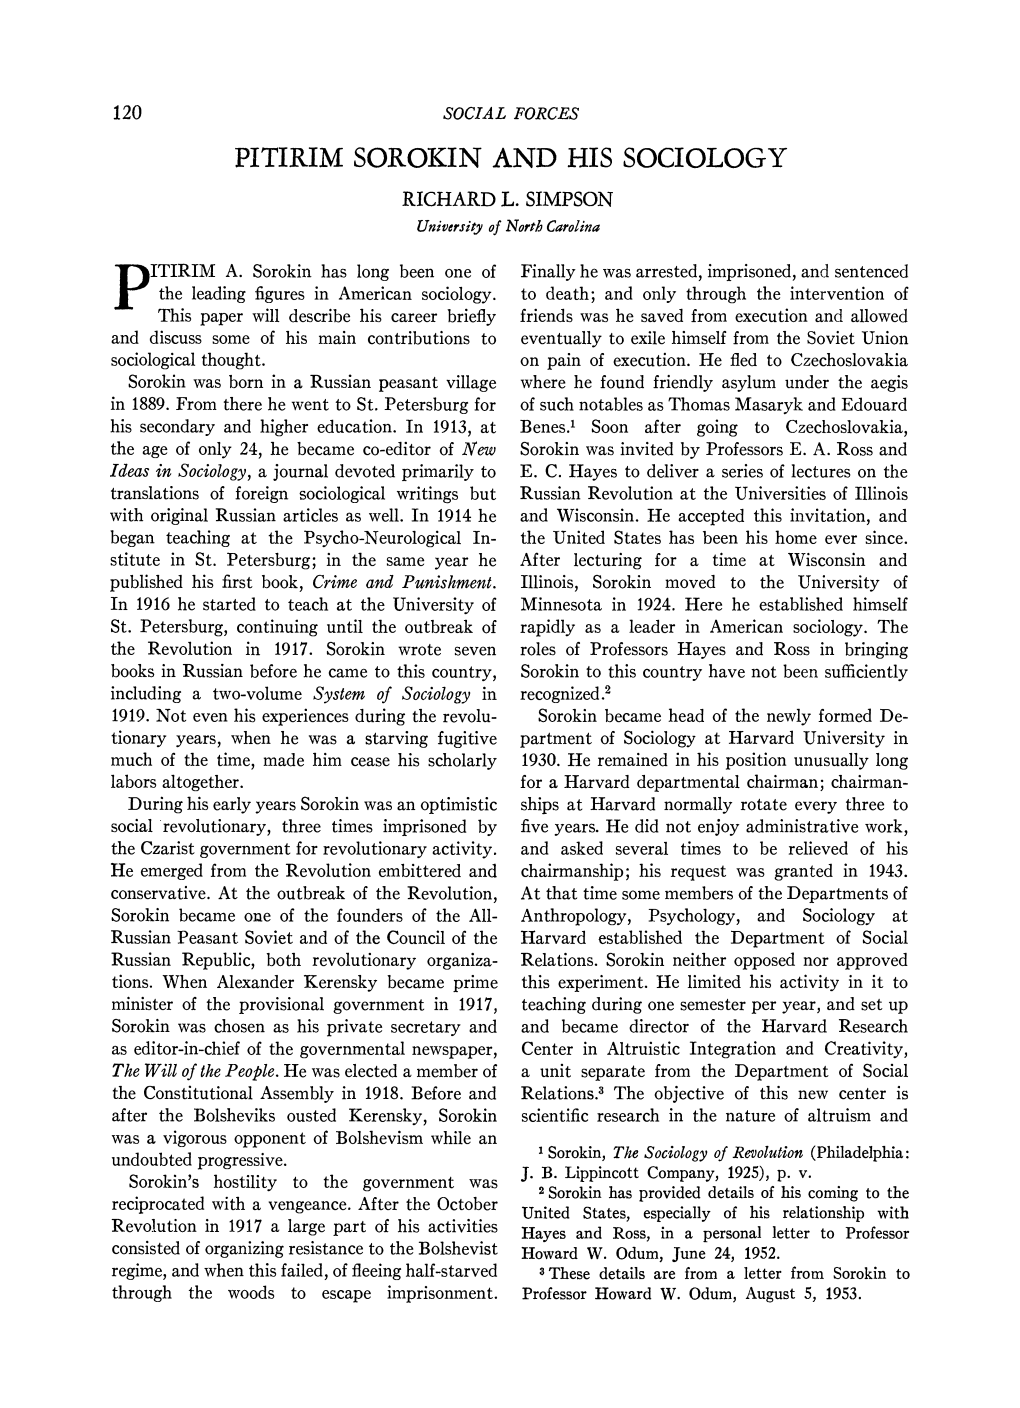 Pitirim Sorokin and His Sociology Richard L